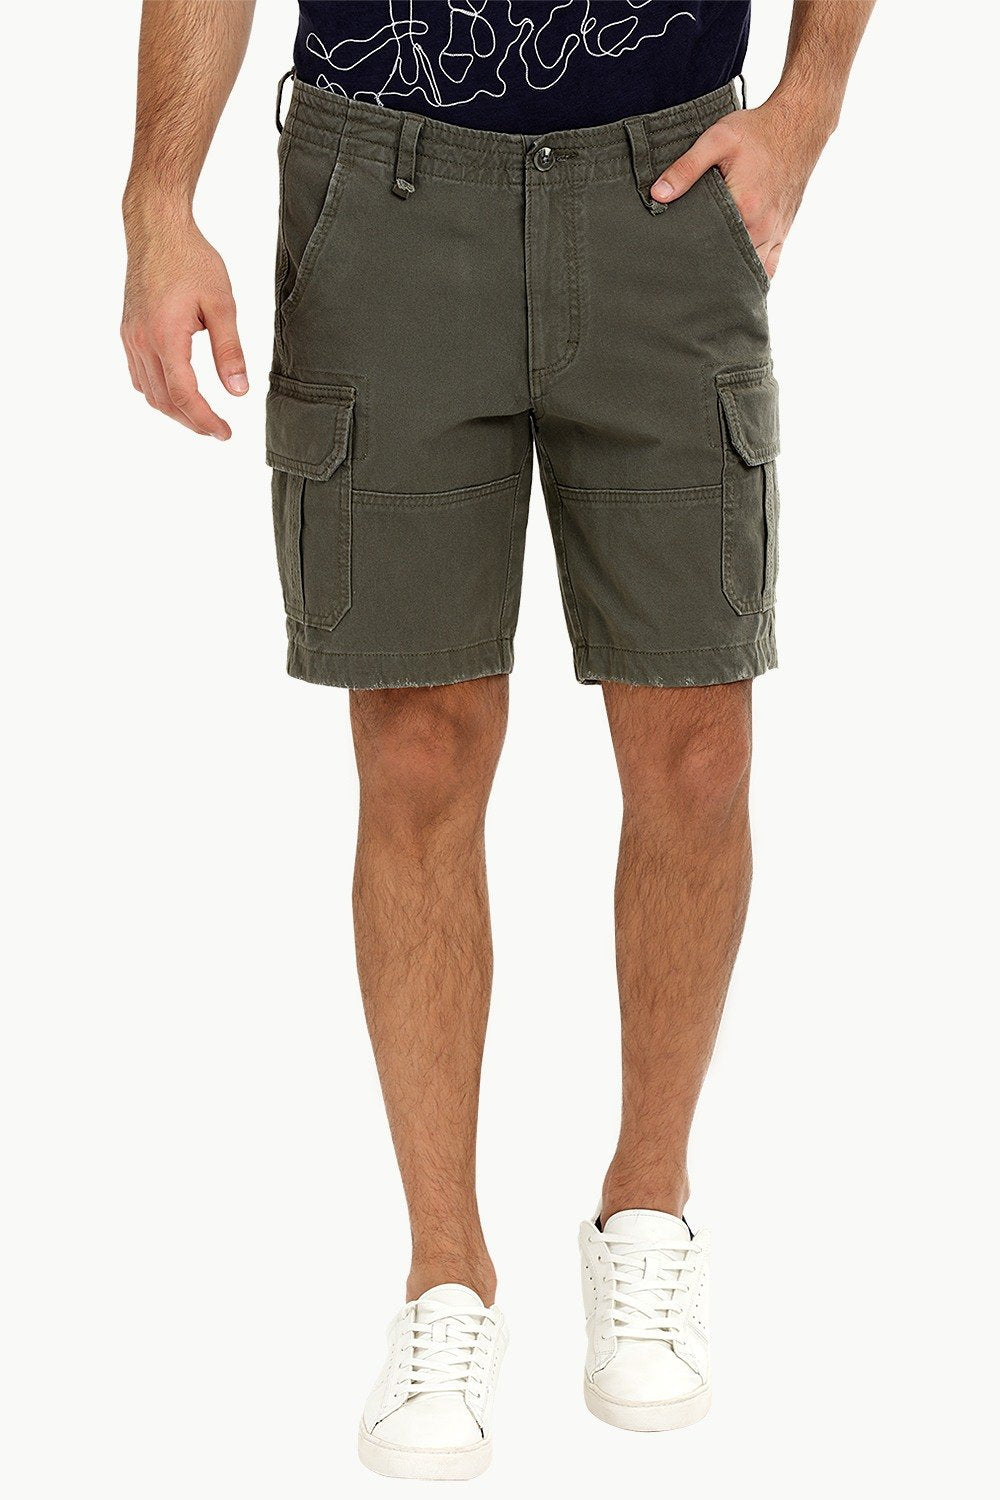 Buy Online Olive Green Men's Rugged Cargo Shorts on Zobello